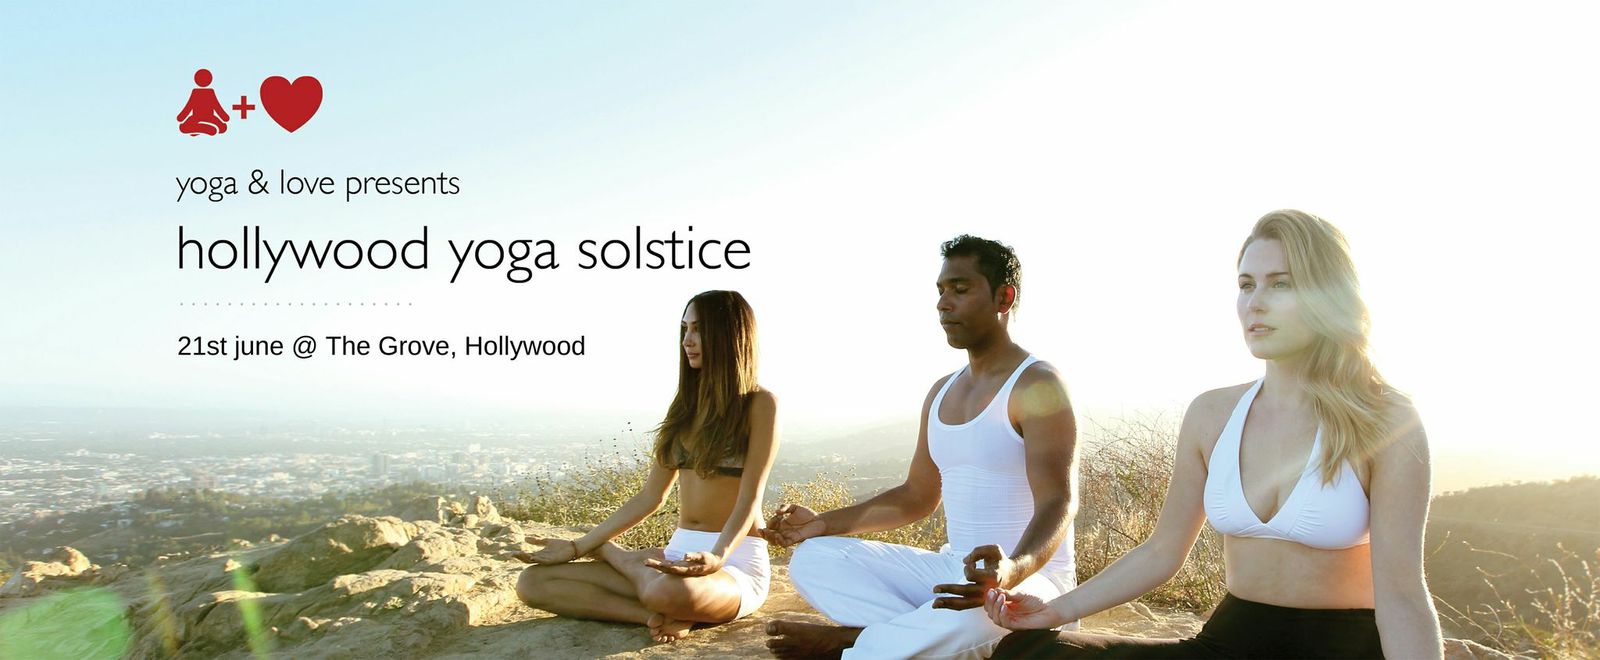 Люблю йогу. Солнцестояние йога. Йога любви книга. Love is йога. Karunesh 2014 Yoga Love.